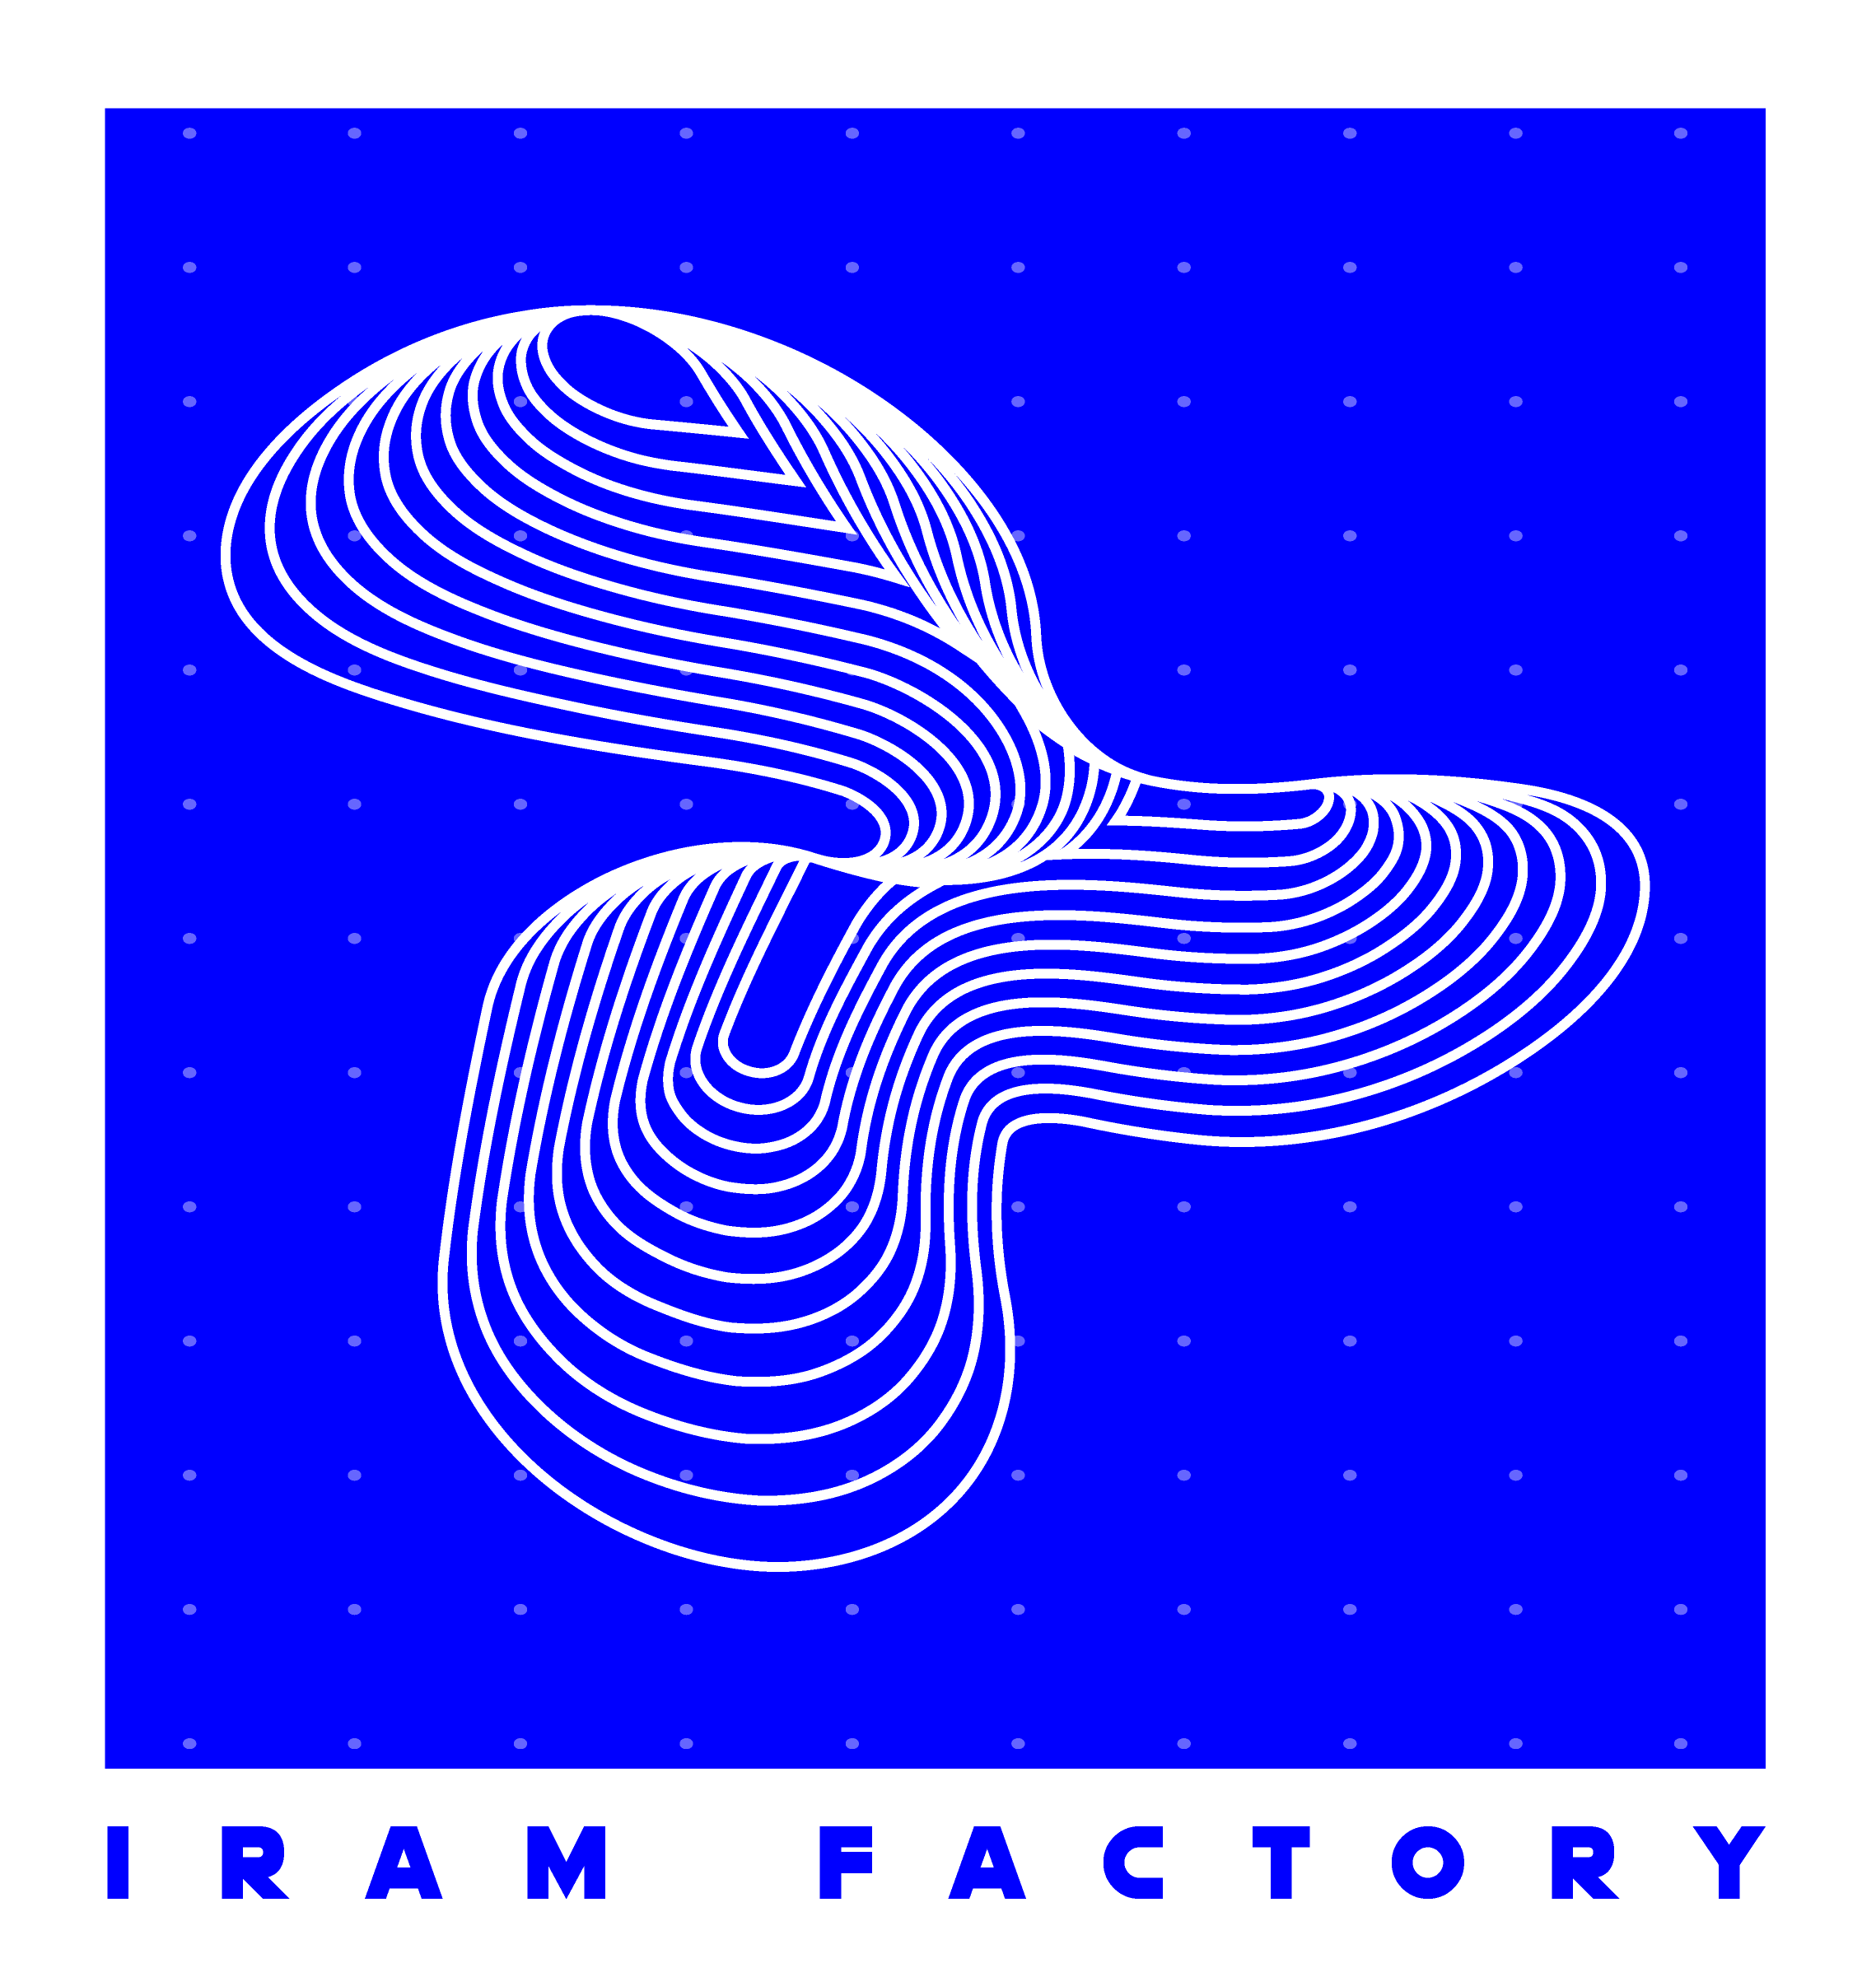 IRAM Factory